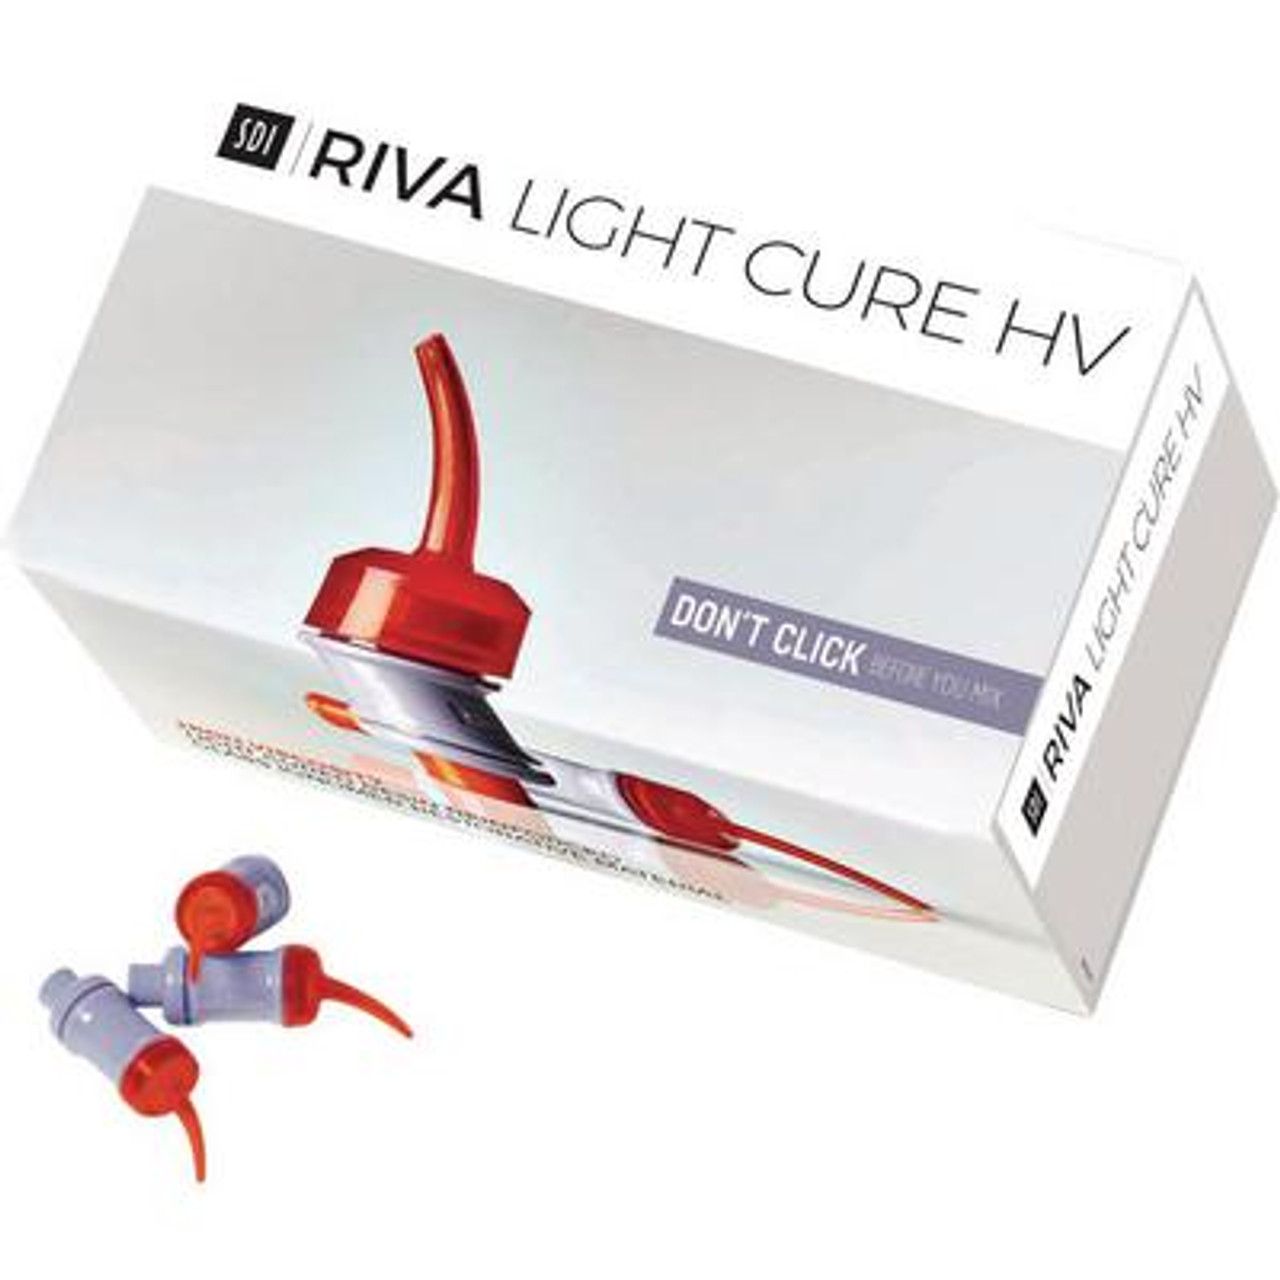 SDI Riva Glass Ionomer Light Cure HV Capsules, Shade A1 Standard, 50/bx 8730001